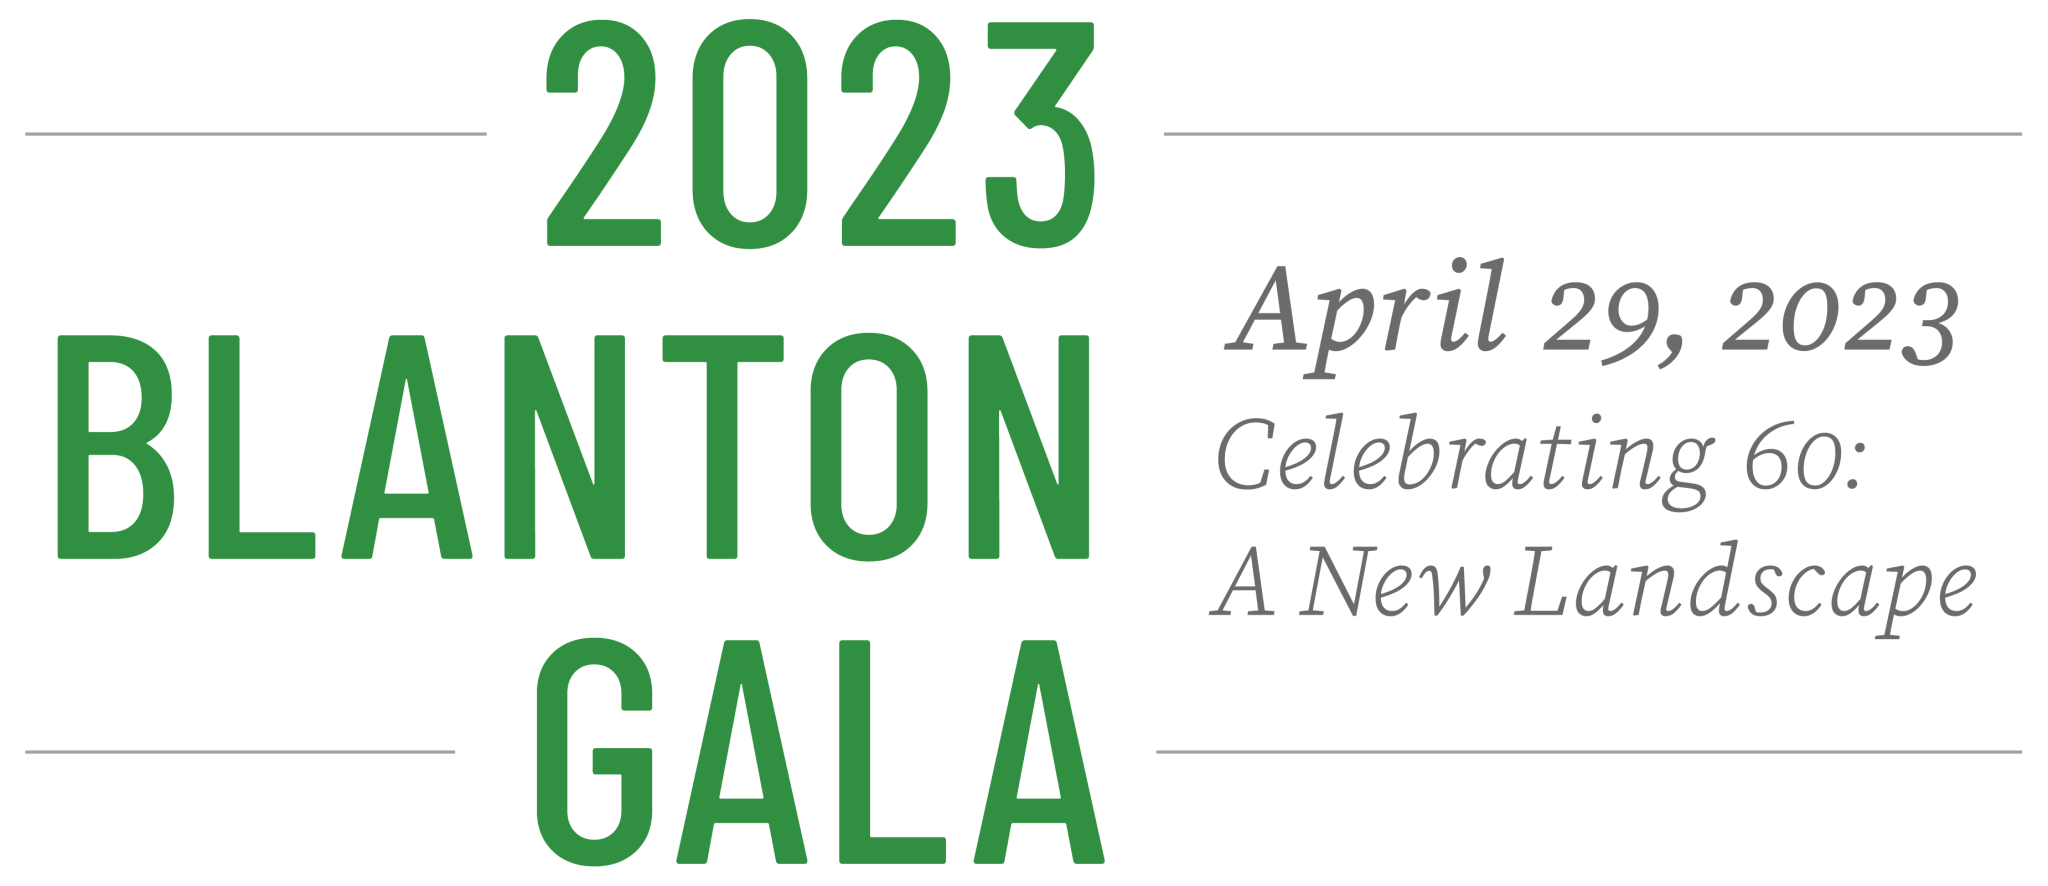 A logo stating 2023 Blanton Galad - April 29, 2023. Celebrating 60: A New Landscape